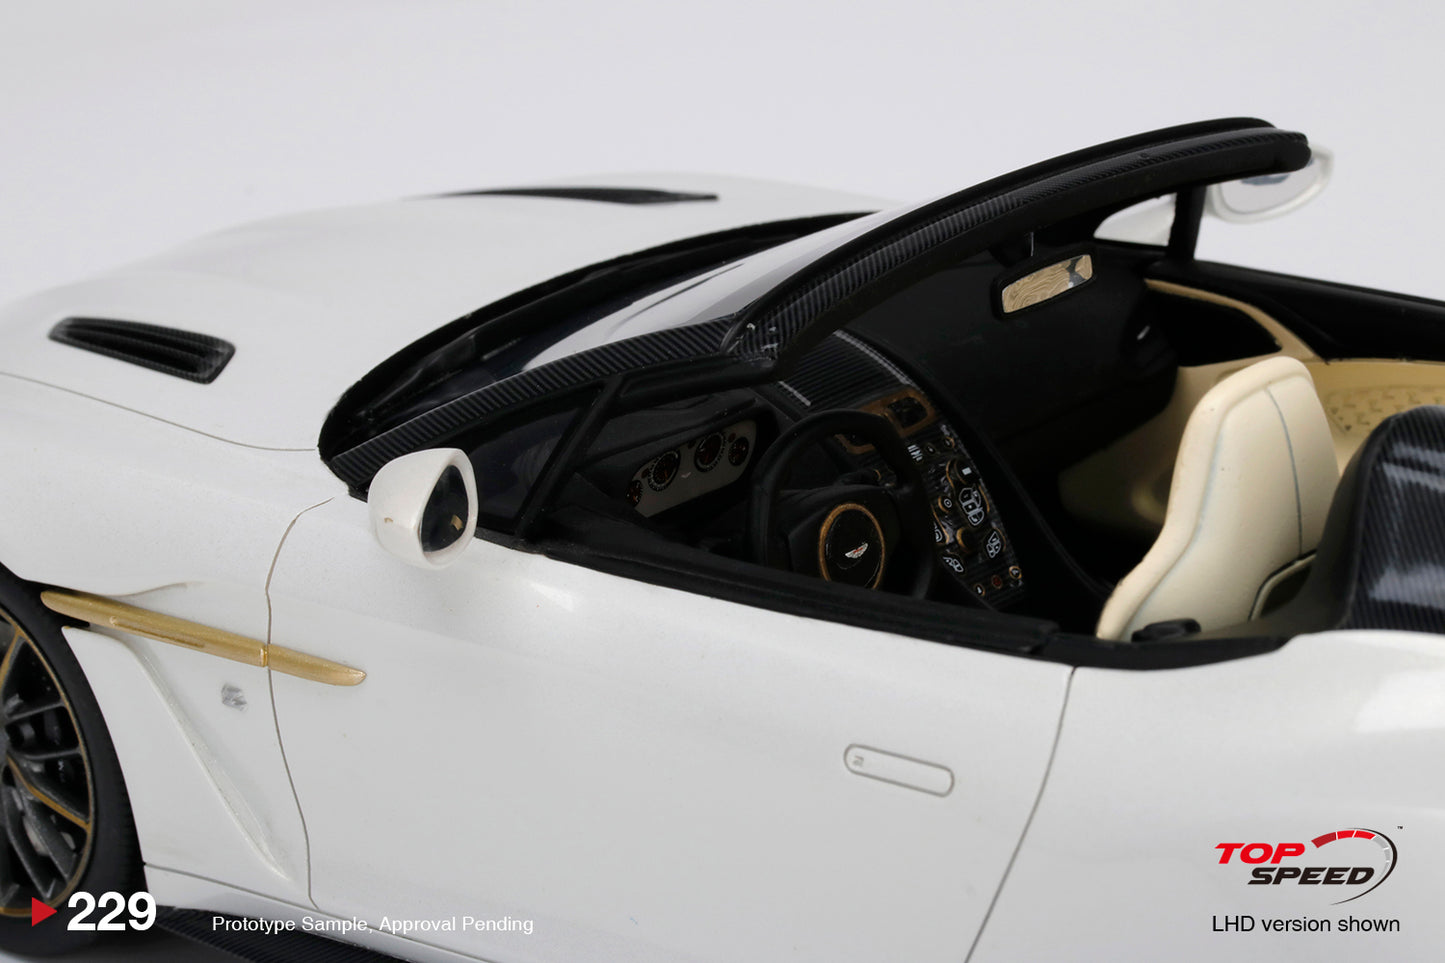 Topspeed 1:18 Aston Martin Vanquish Zagato Speedster Escaping White